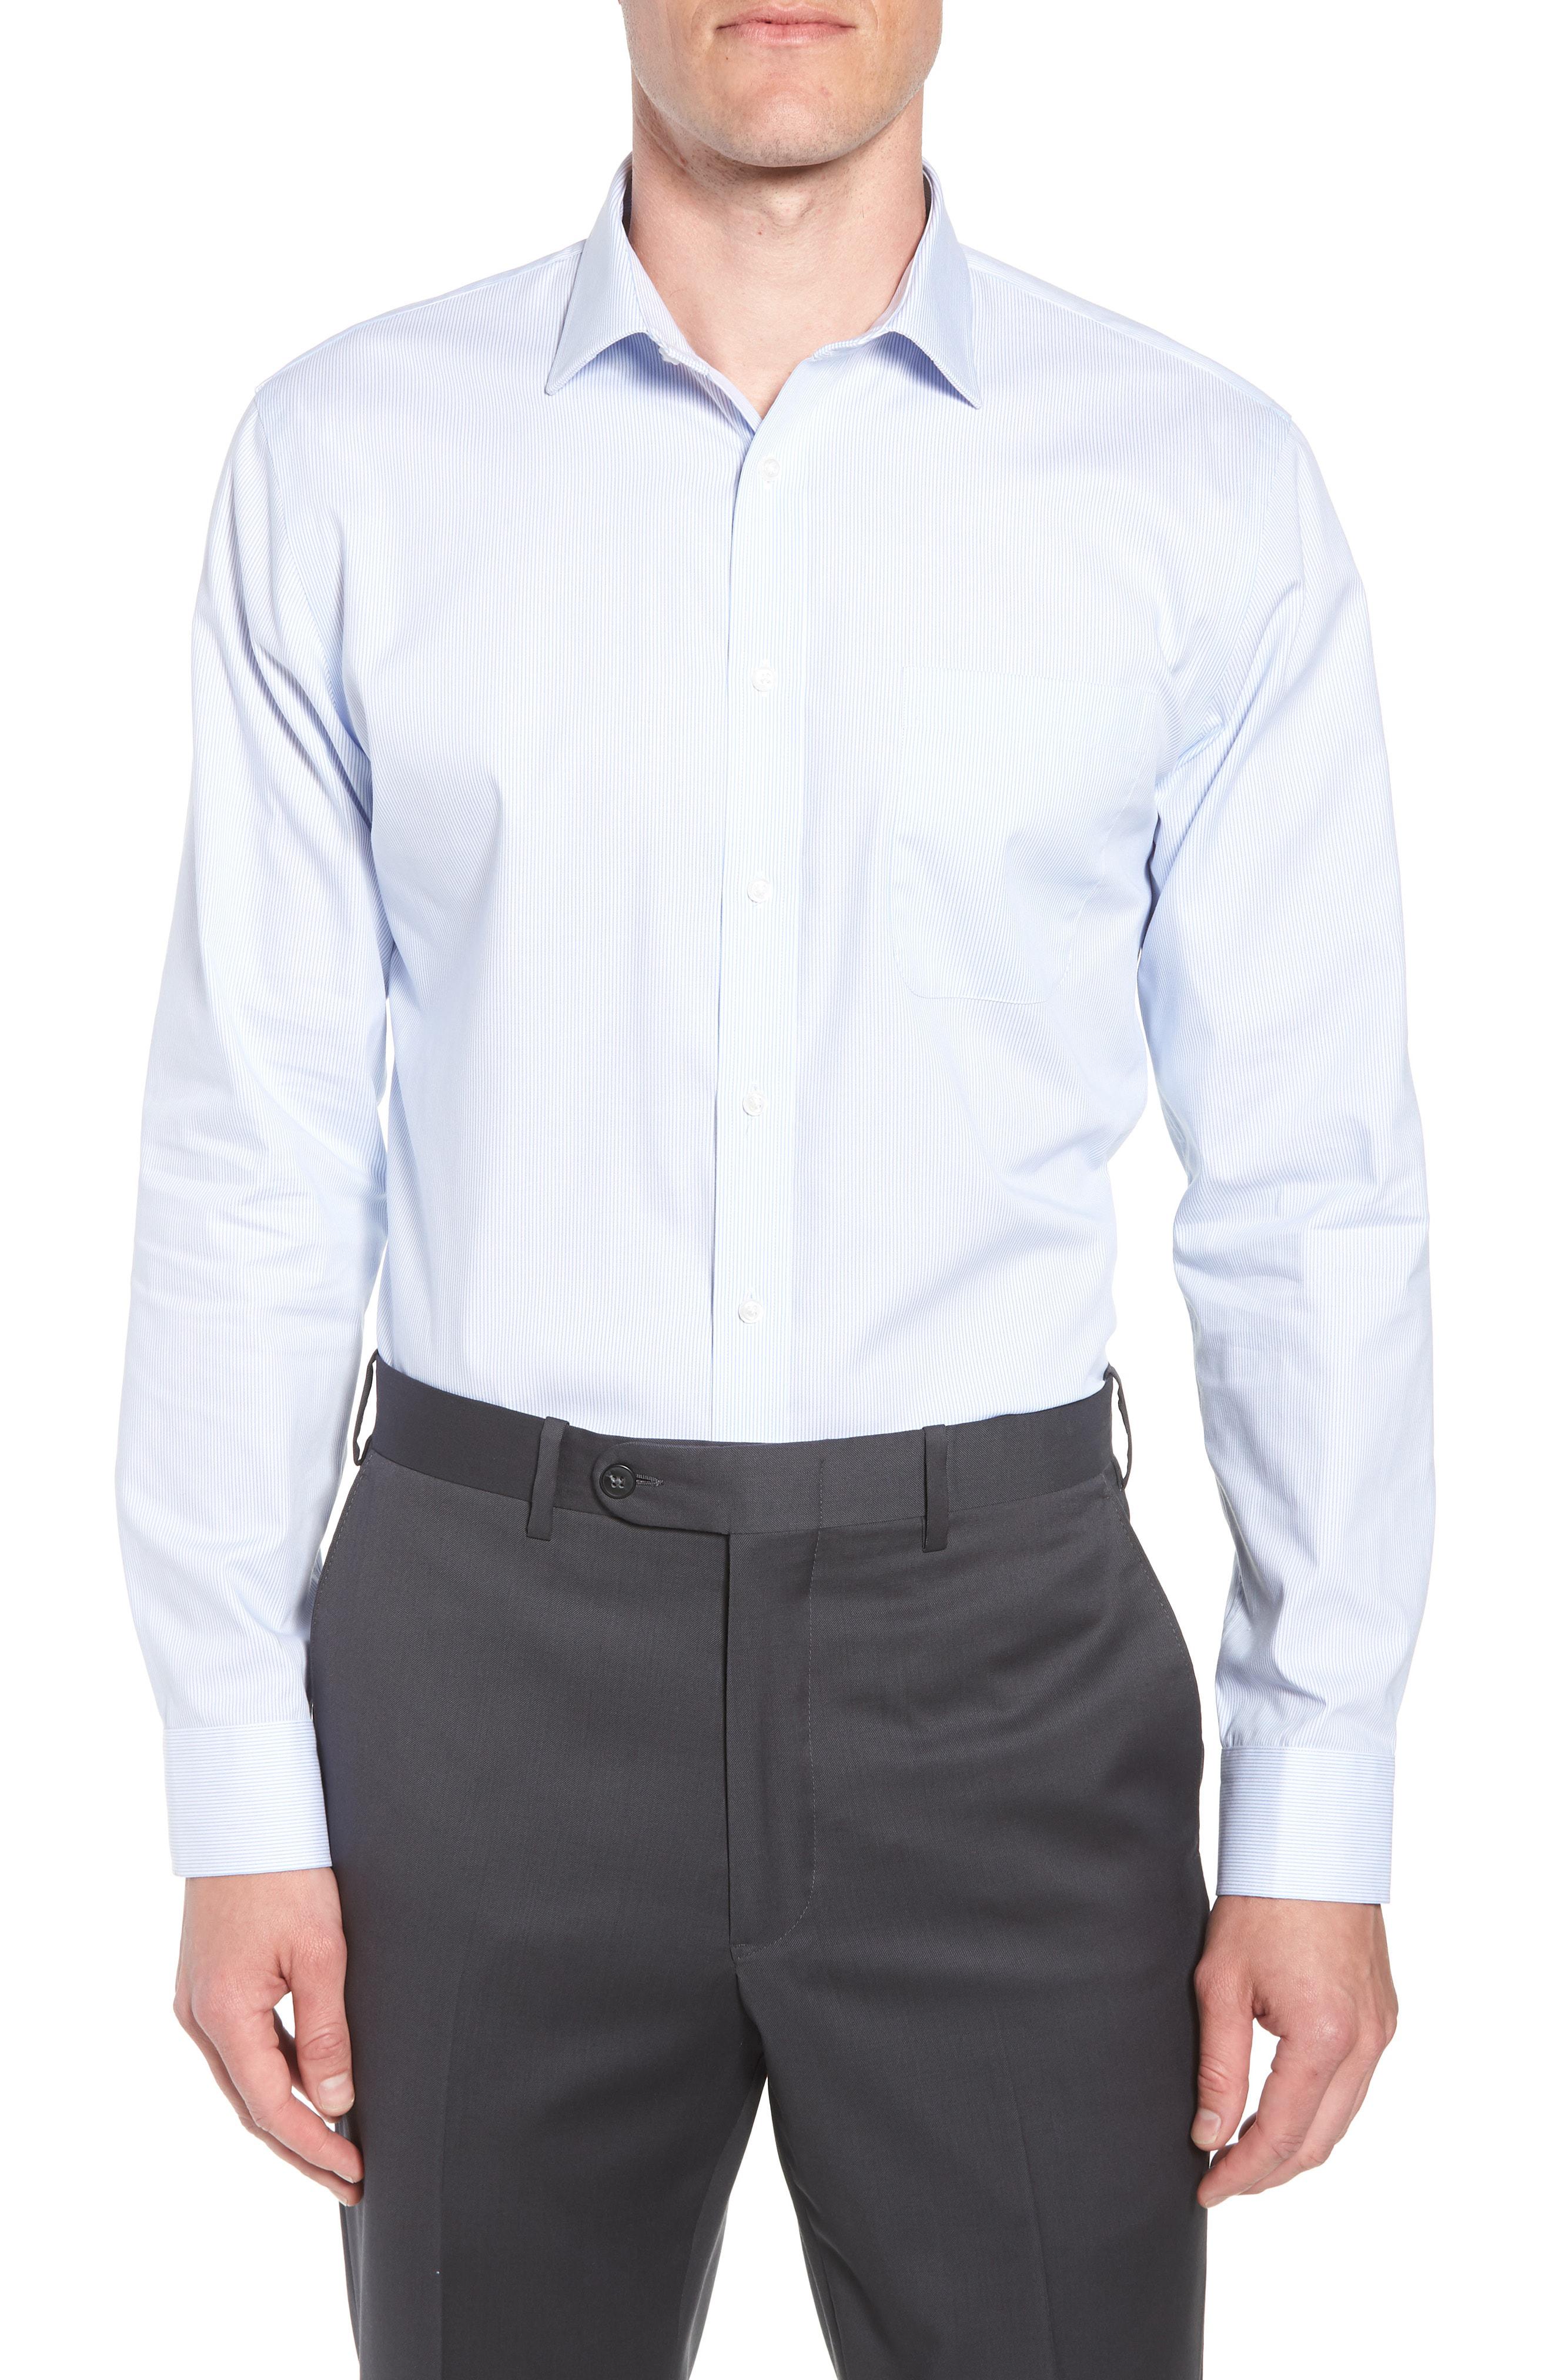 Nordstrom Trim Fit Non-iron Stripe Dress Shirt in White for Men - Lyst